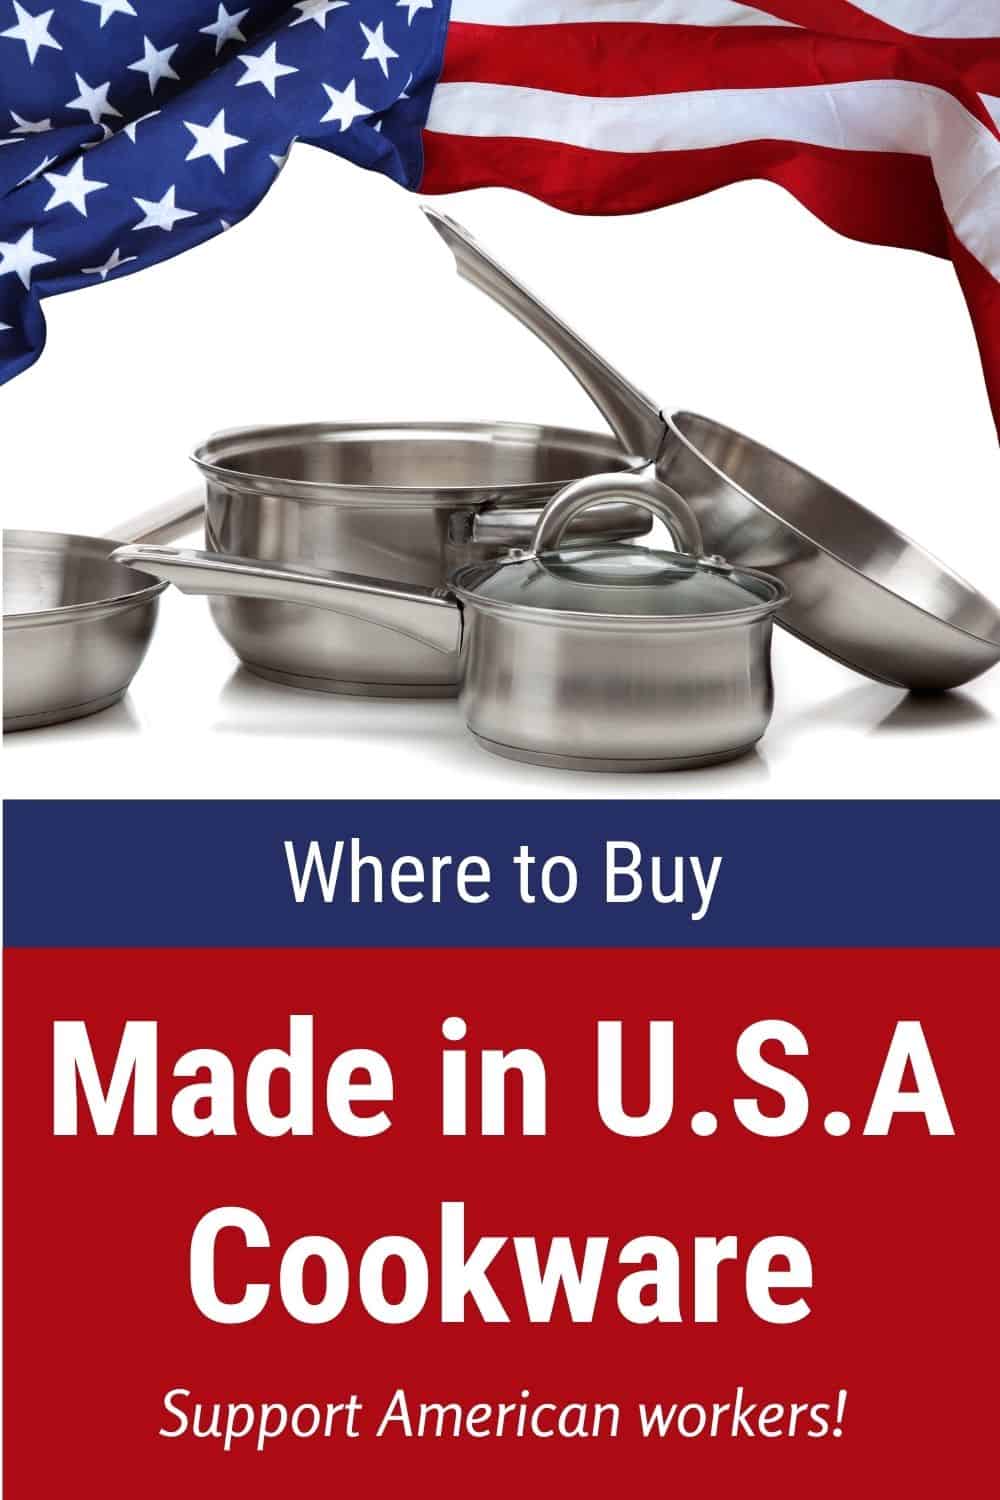 Made in U.S.A. Cookware